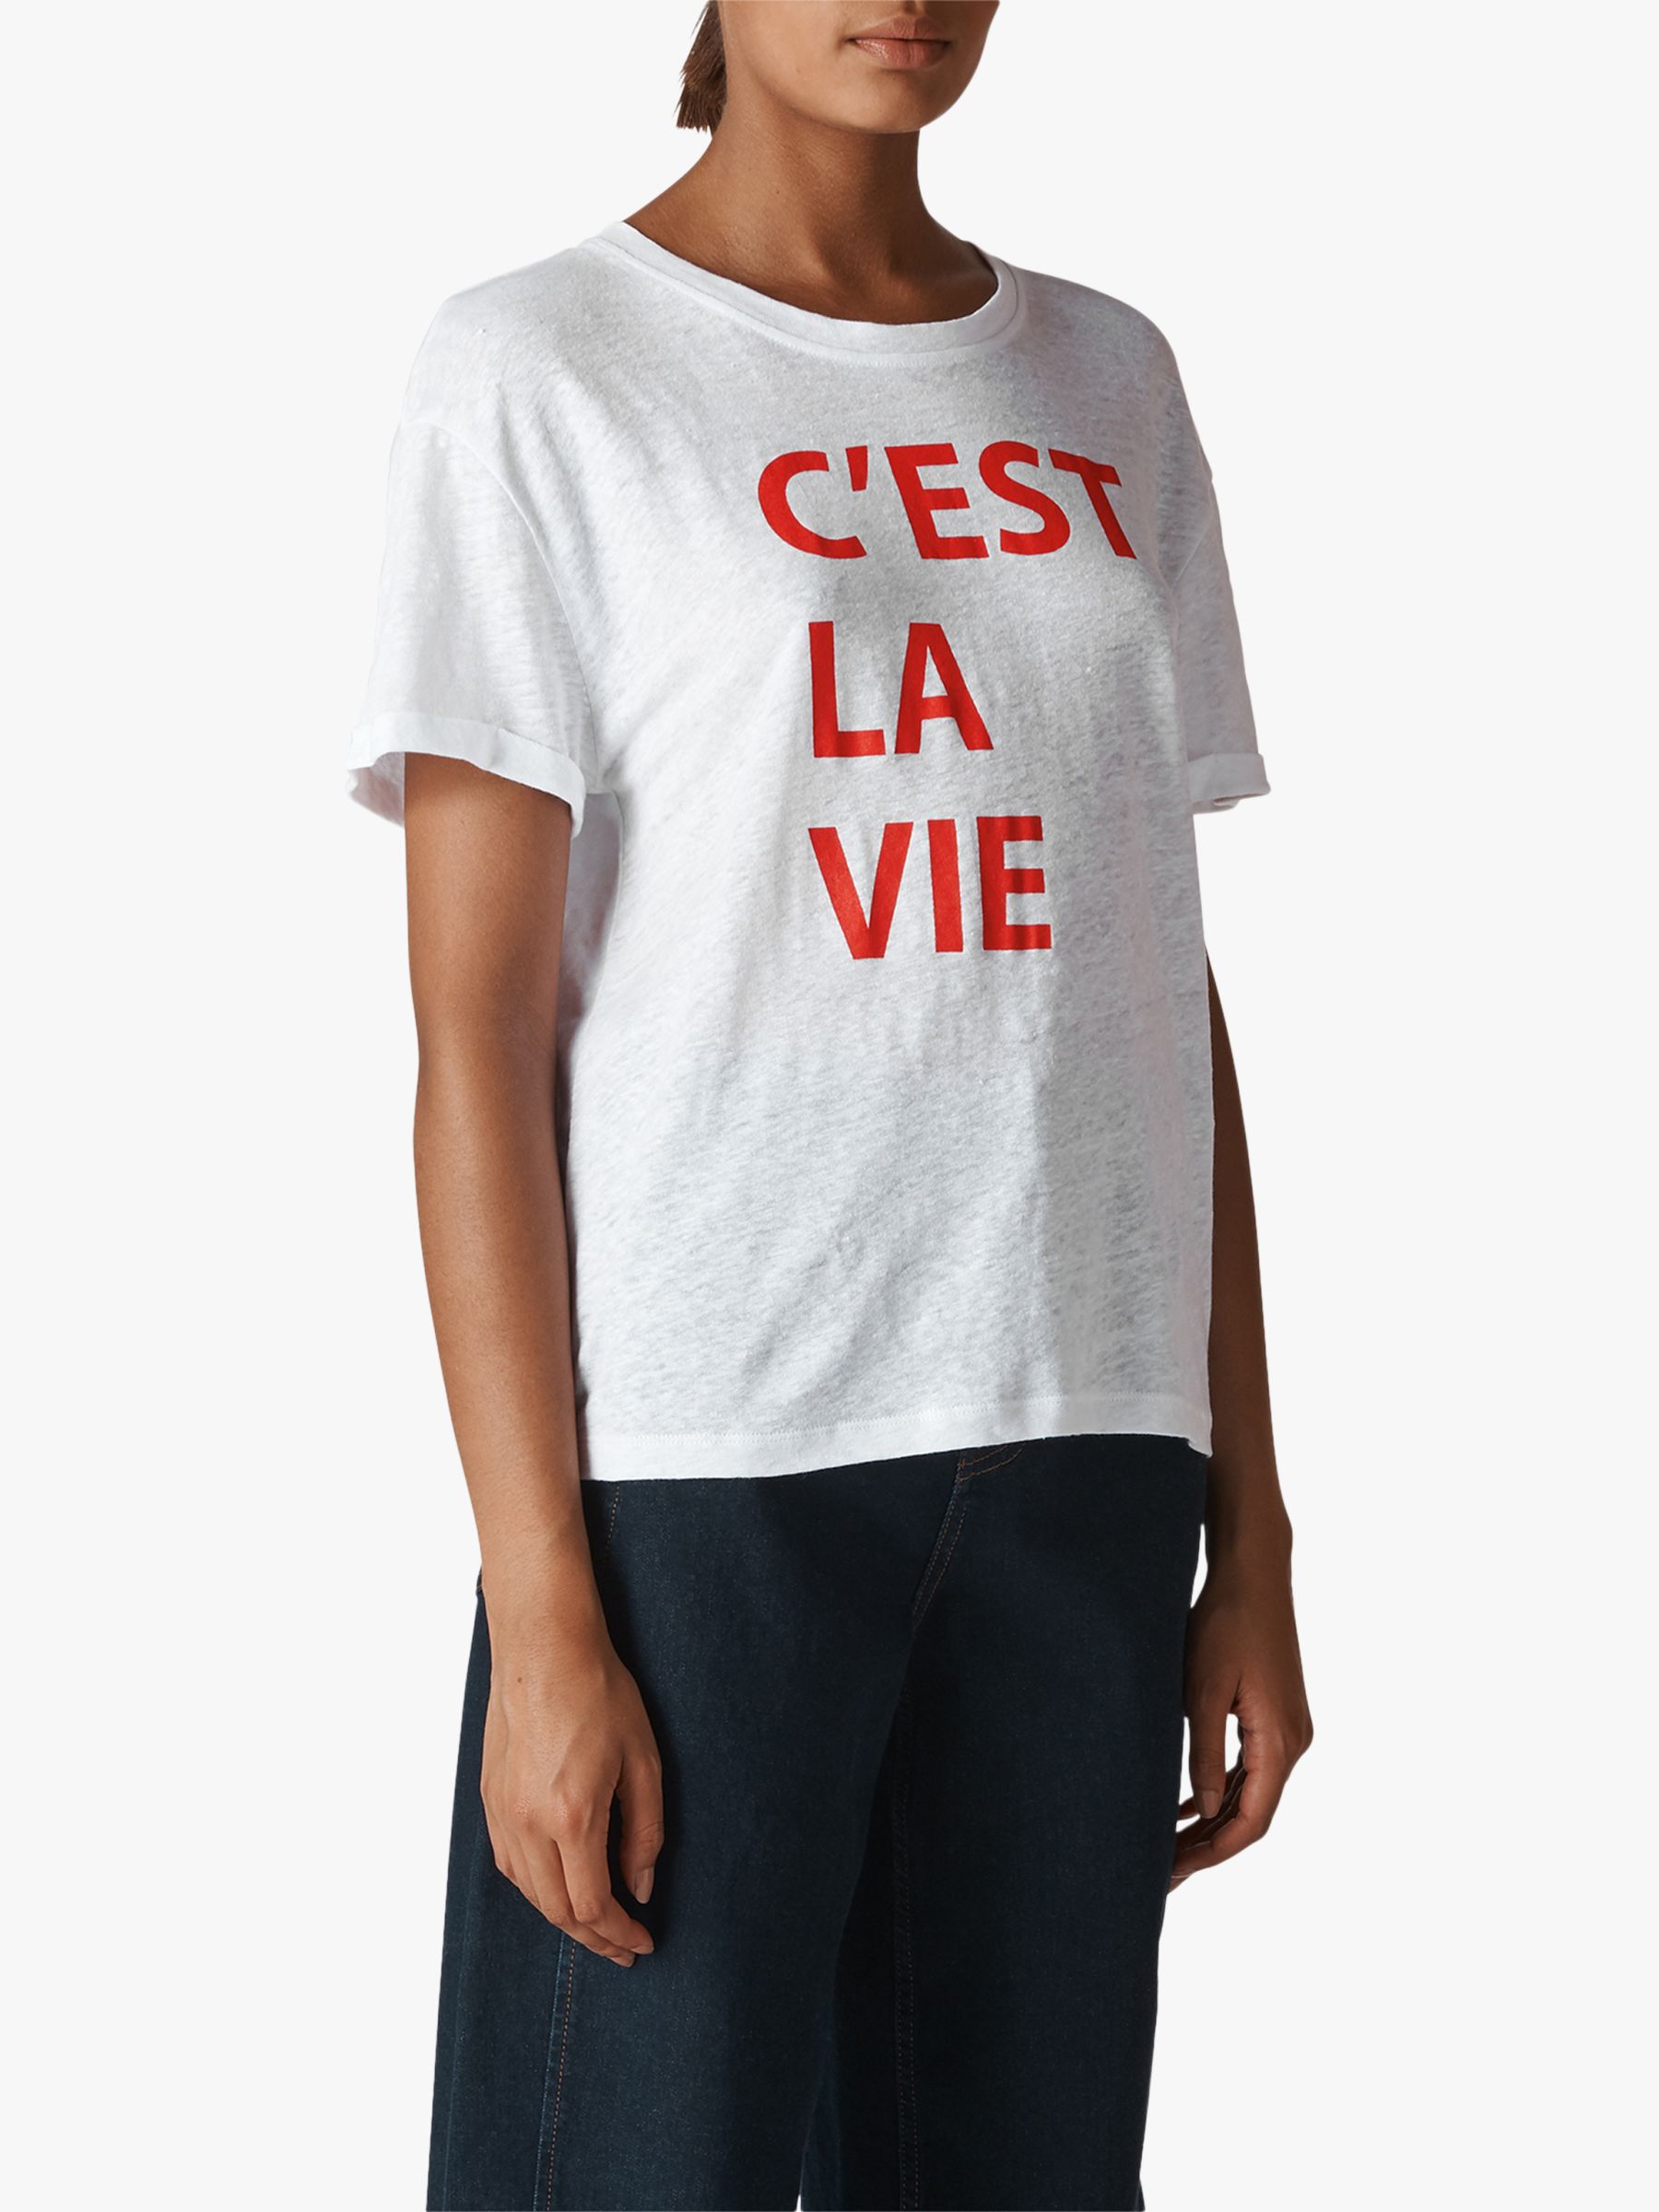 Whistles 'C'est La Vie' Typography Lounge T-Shirt, White